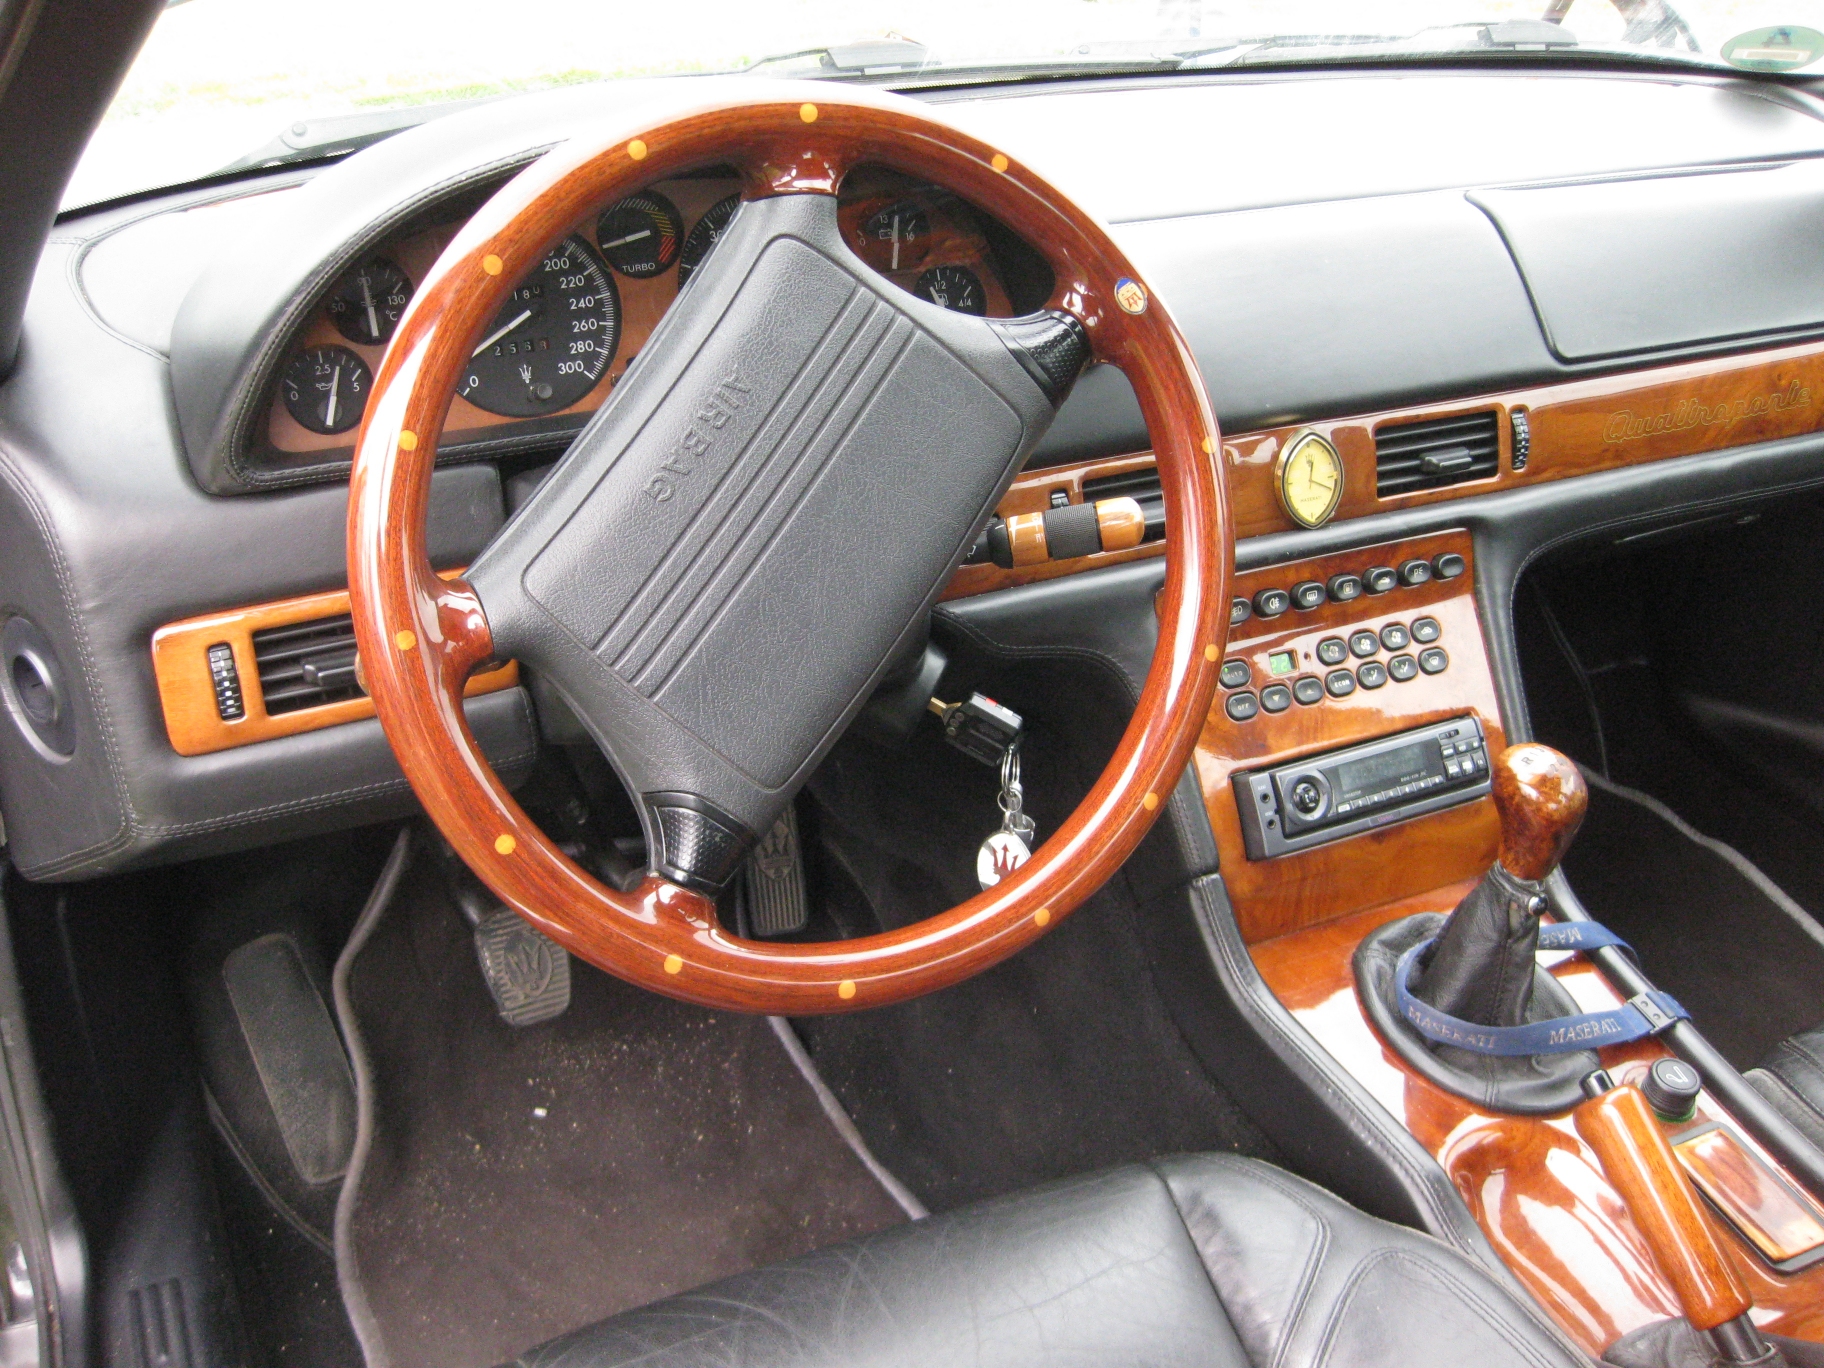 File:Maserati QP IV Cockpit.JPG - Wikimedia Commons